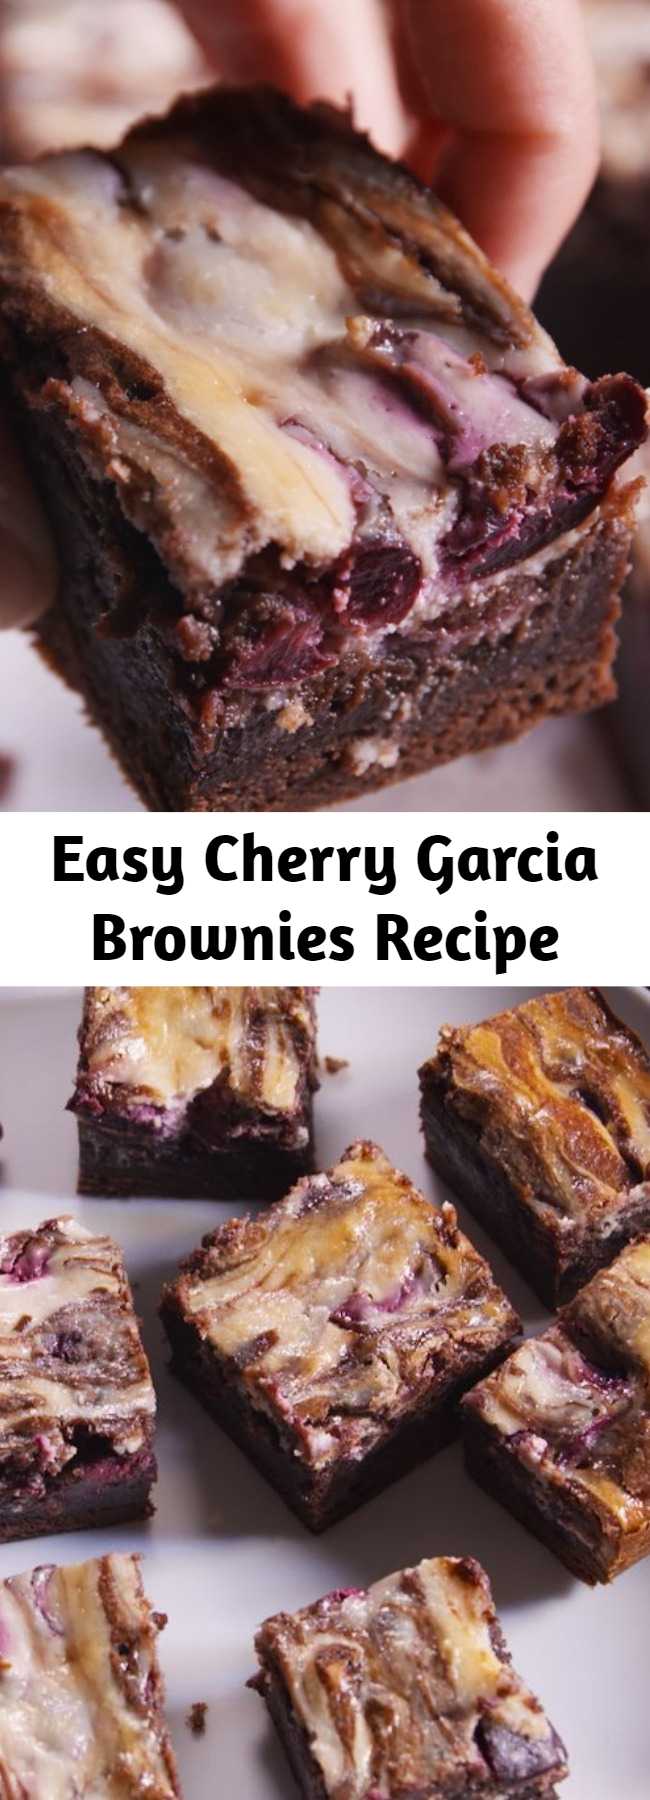 Easy Cherry Garcia Brownies Recipe - Looking for an easy brownie recipe? This Cherry Garcia Brownies Recipe is the best.